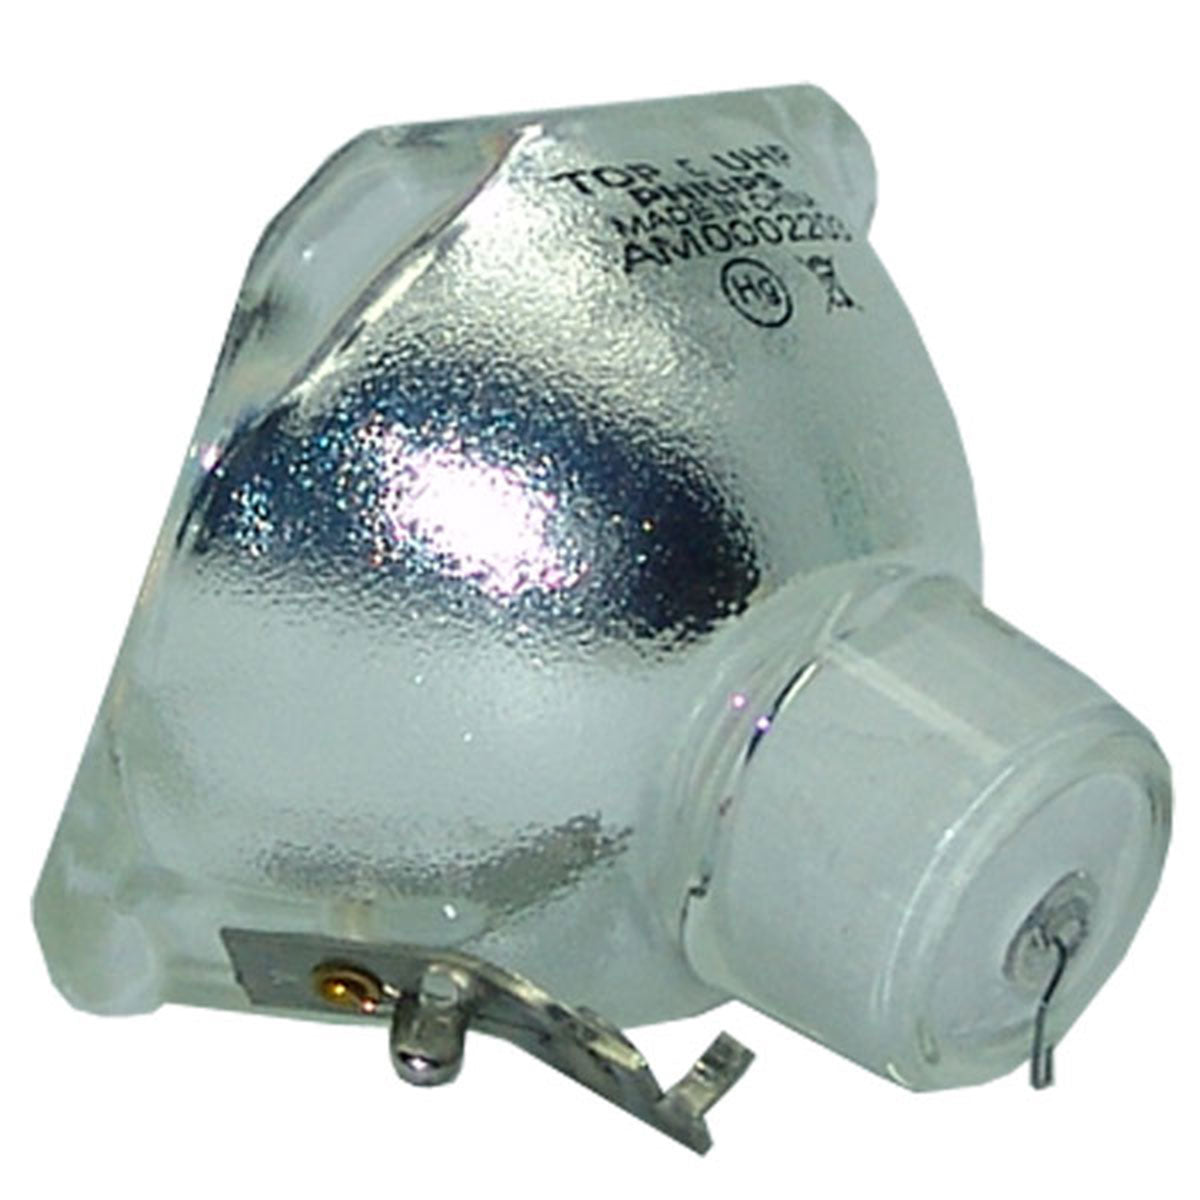 Dukane 456-223 Philips Projector Bare Lamp